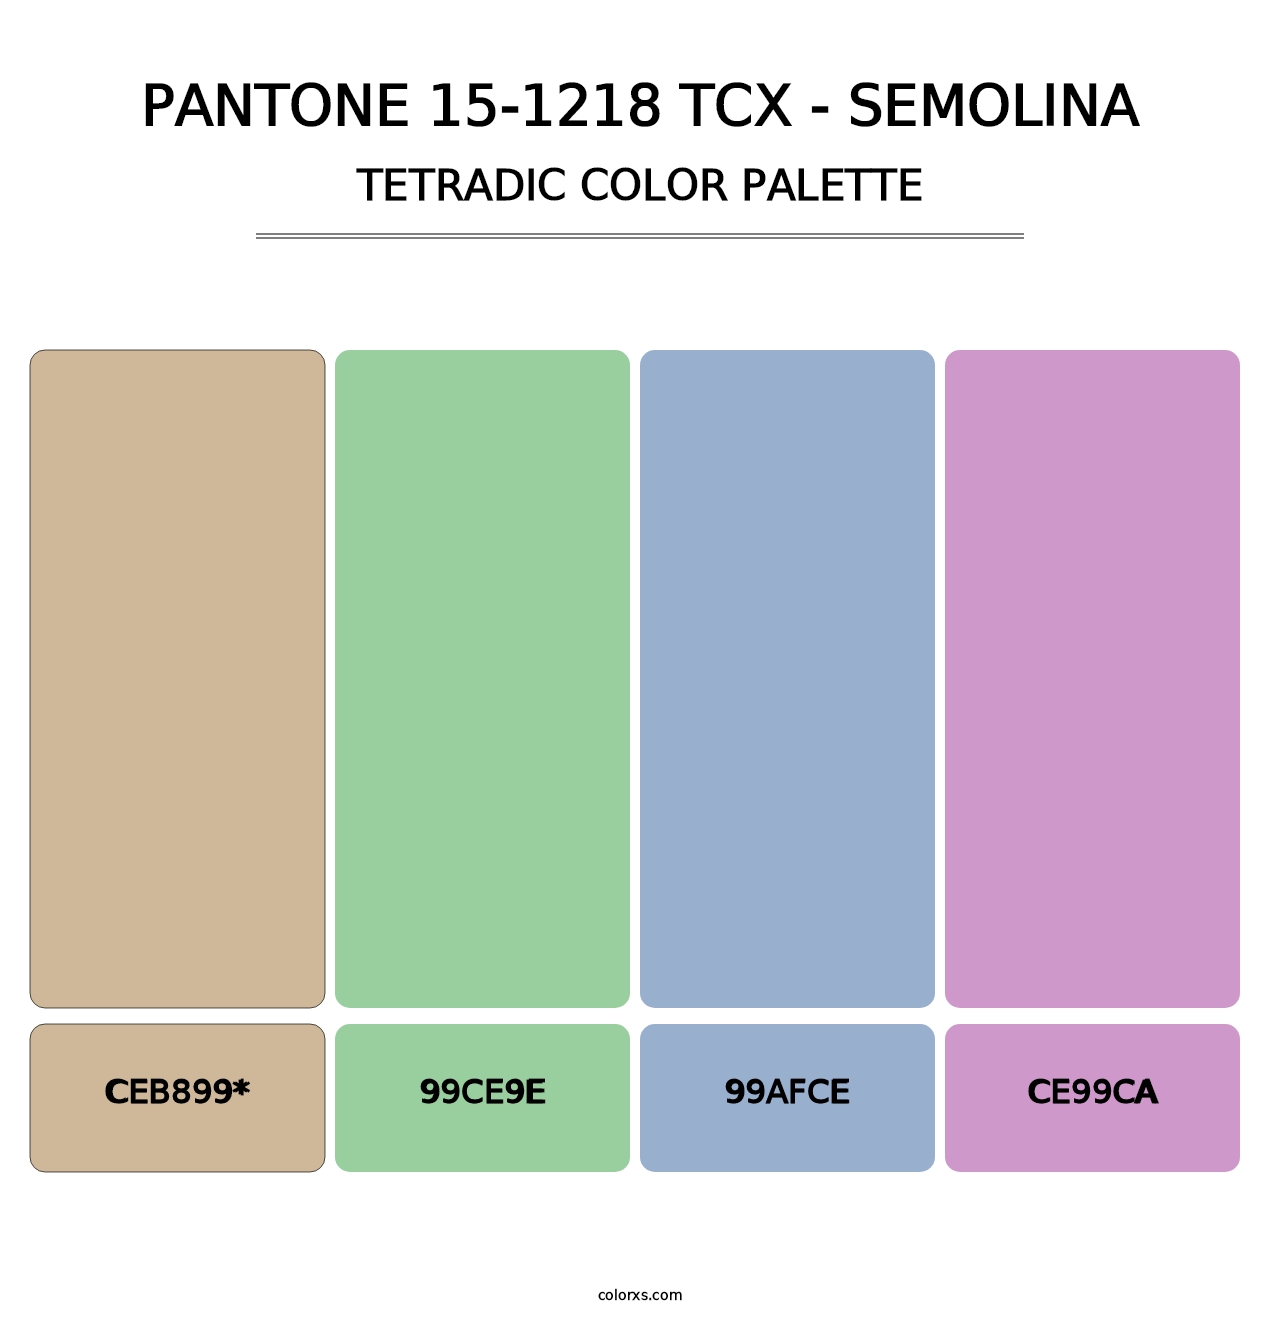 PANTONE 15-1218 TCX - Semolina - Tetradic Color Palette